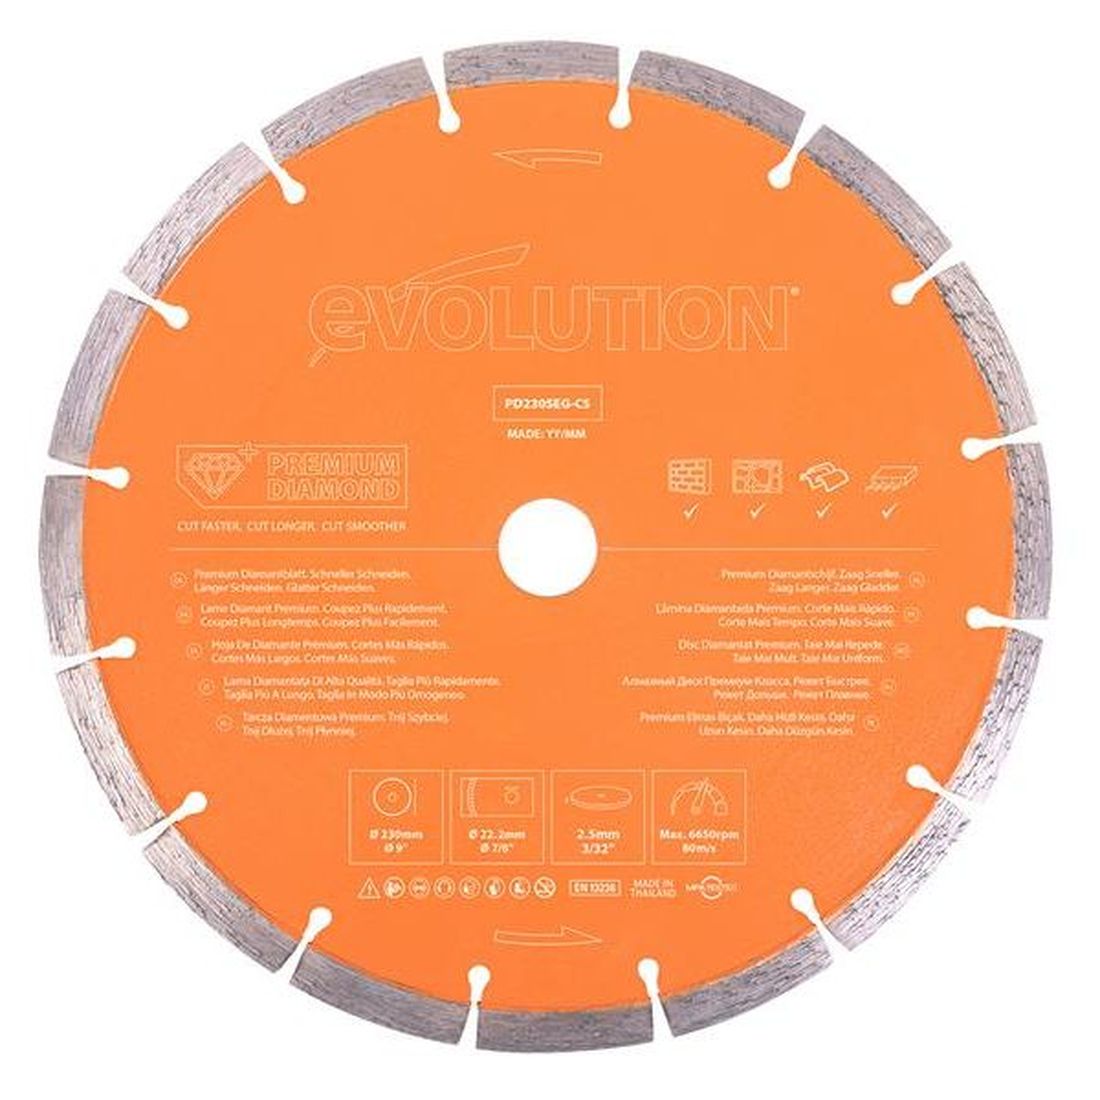 Evolution Premium Diamond Disc Cutter Blade 230 x 22.2mm                                  